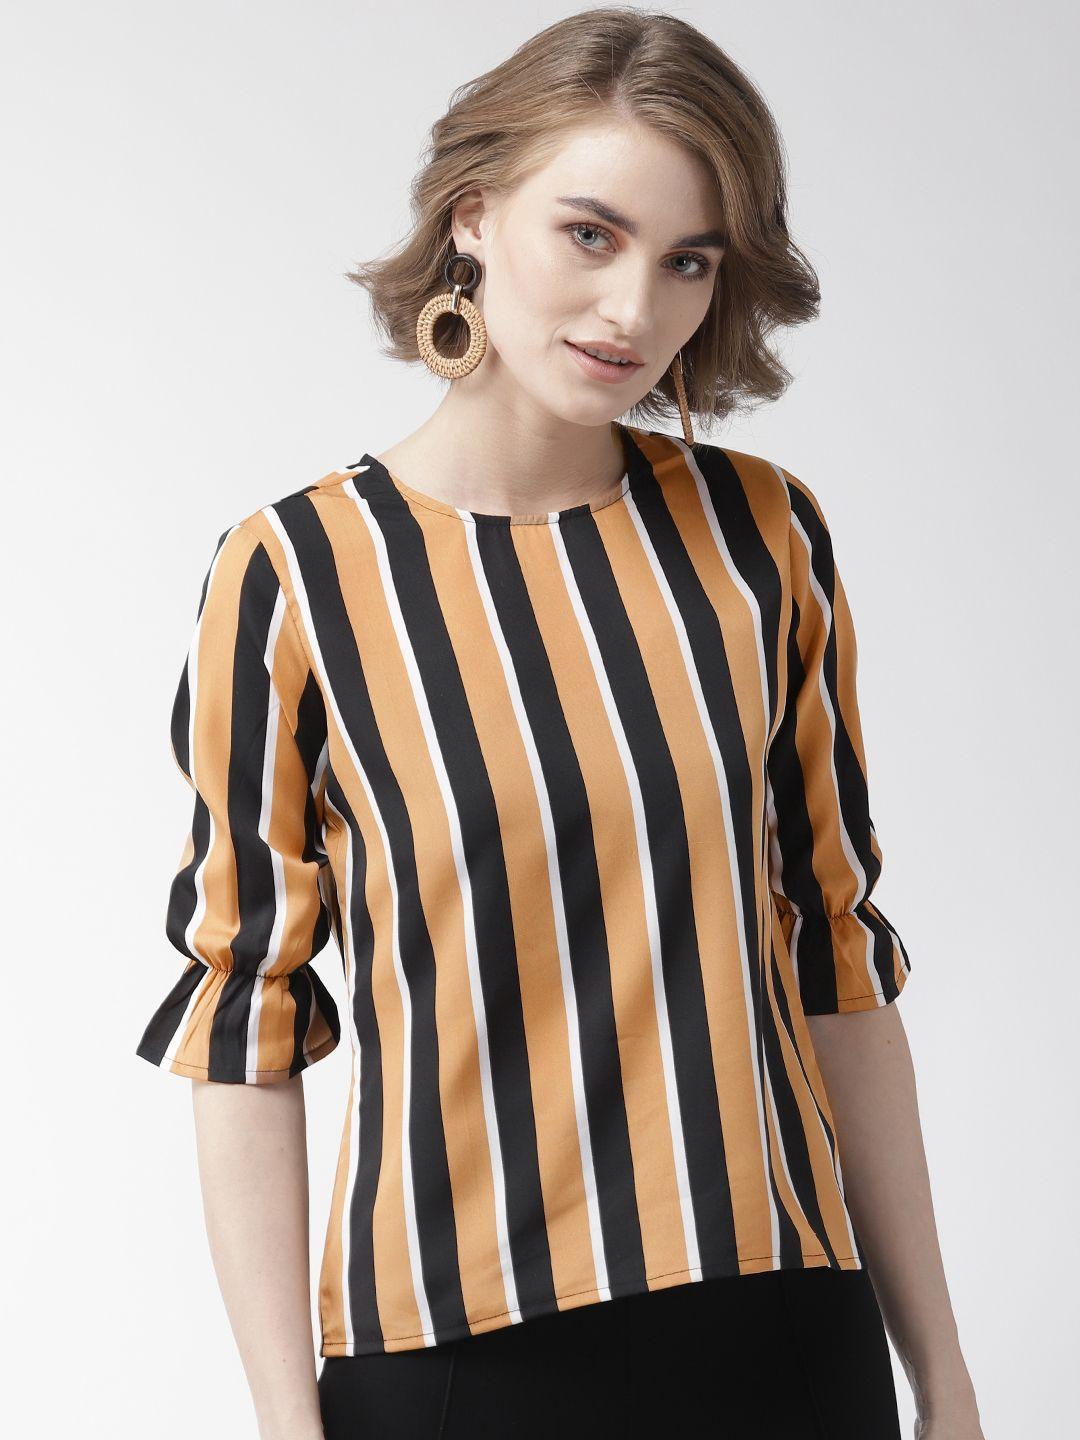 style quotient women mustard brown & black striped top